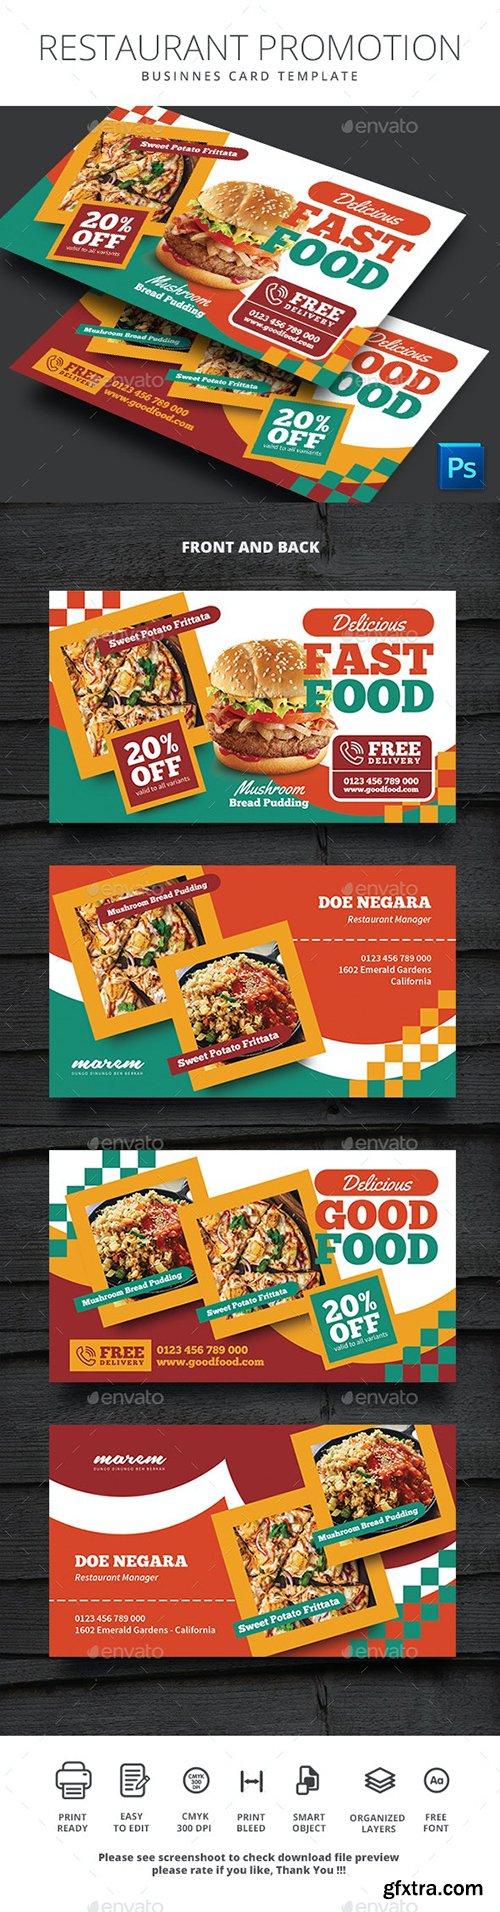 GraphicRiver - Restaurant Promotion Business Card 28004020